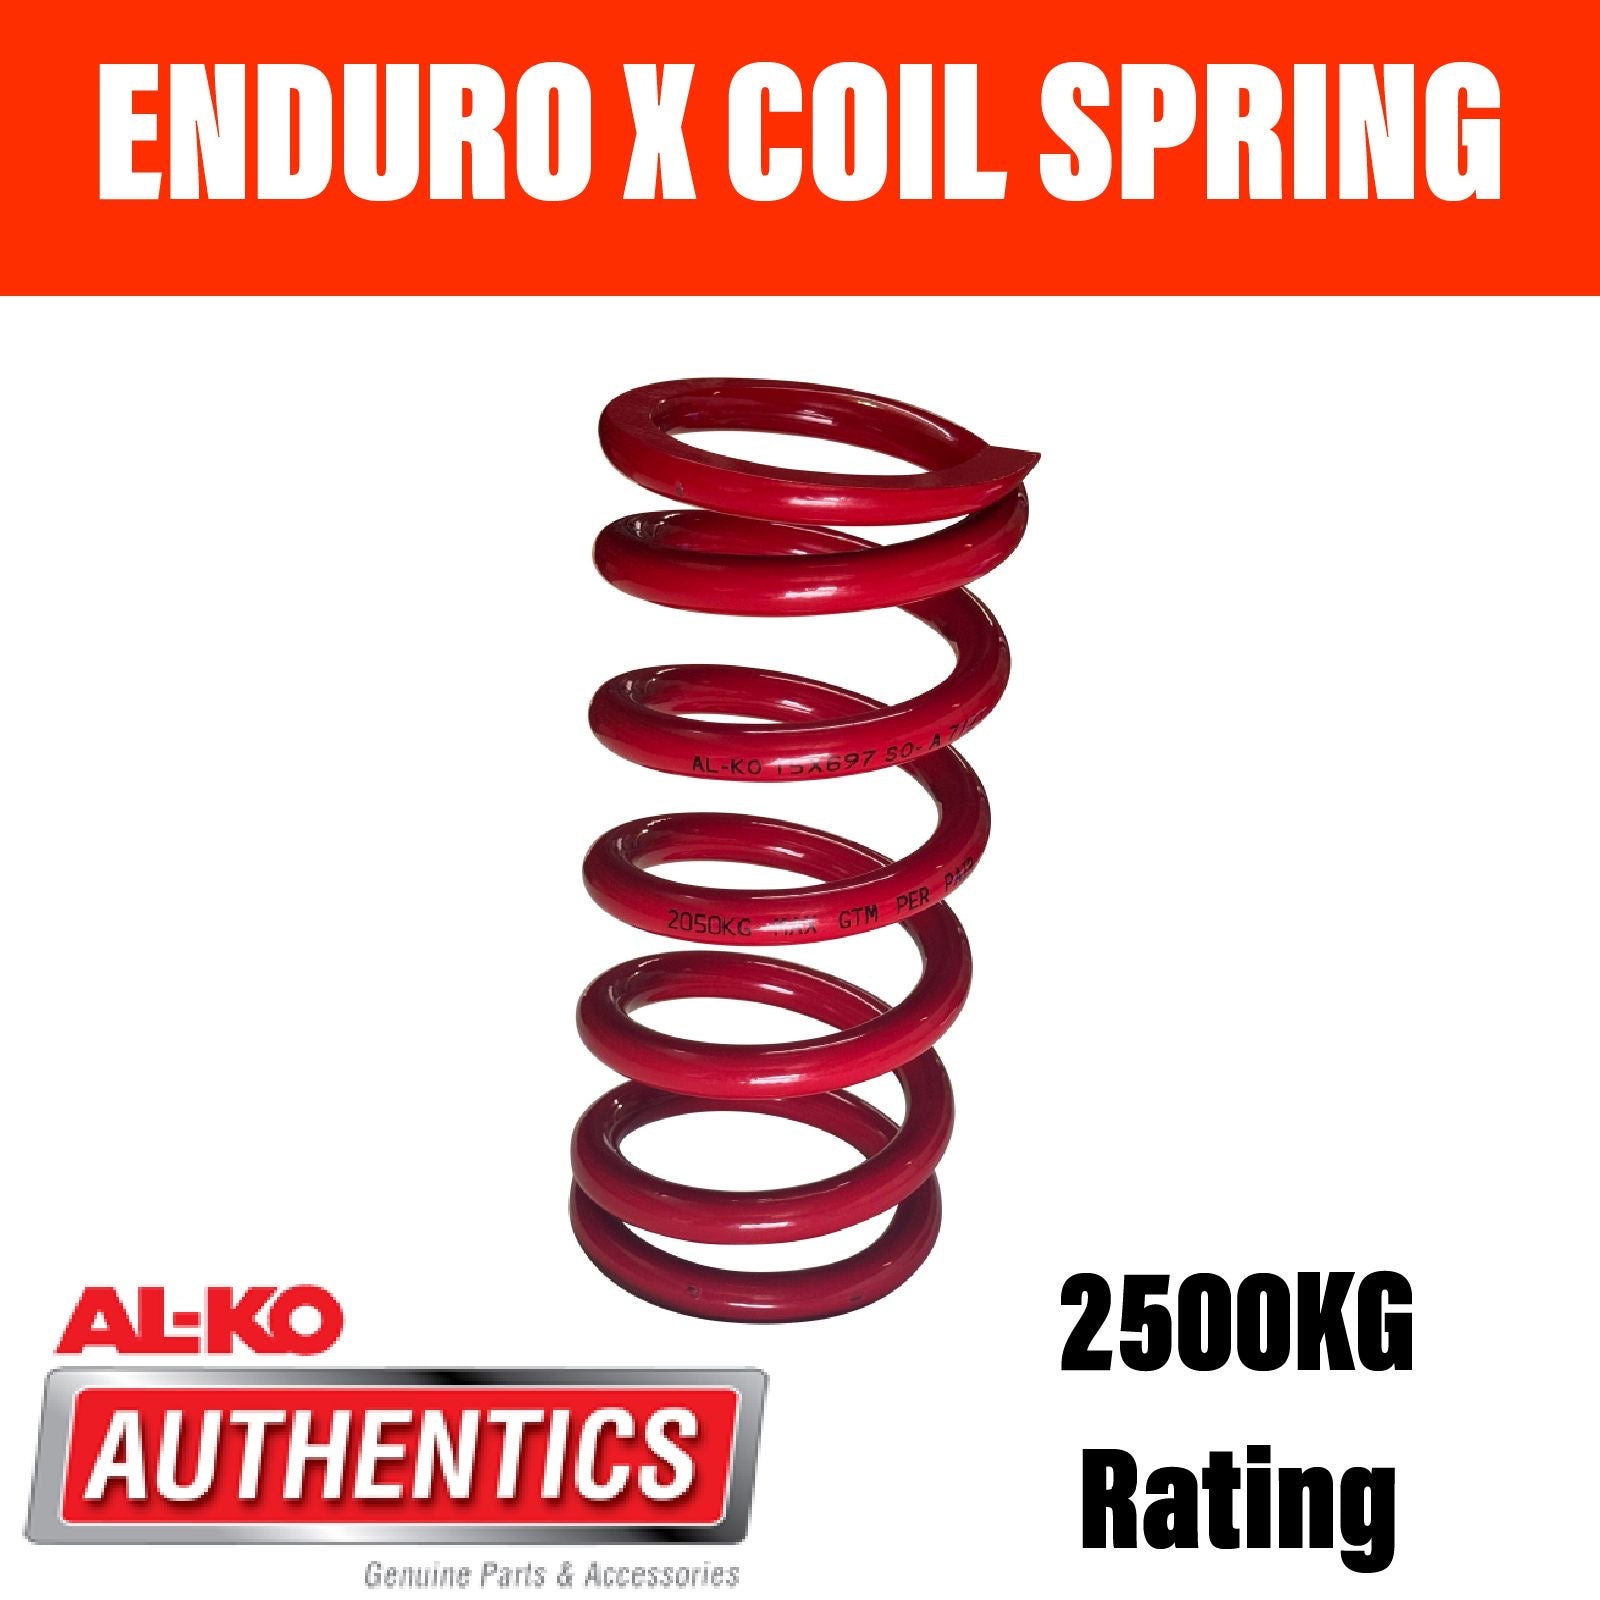 ENDURO X Coil Spring 2500kg GTM Rating per pair